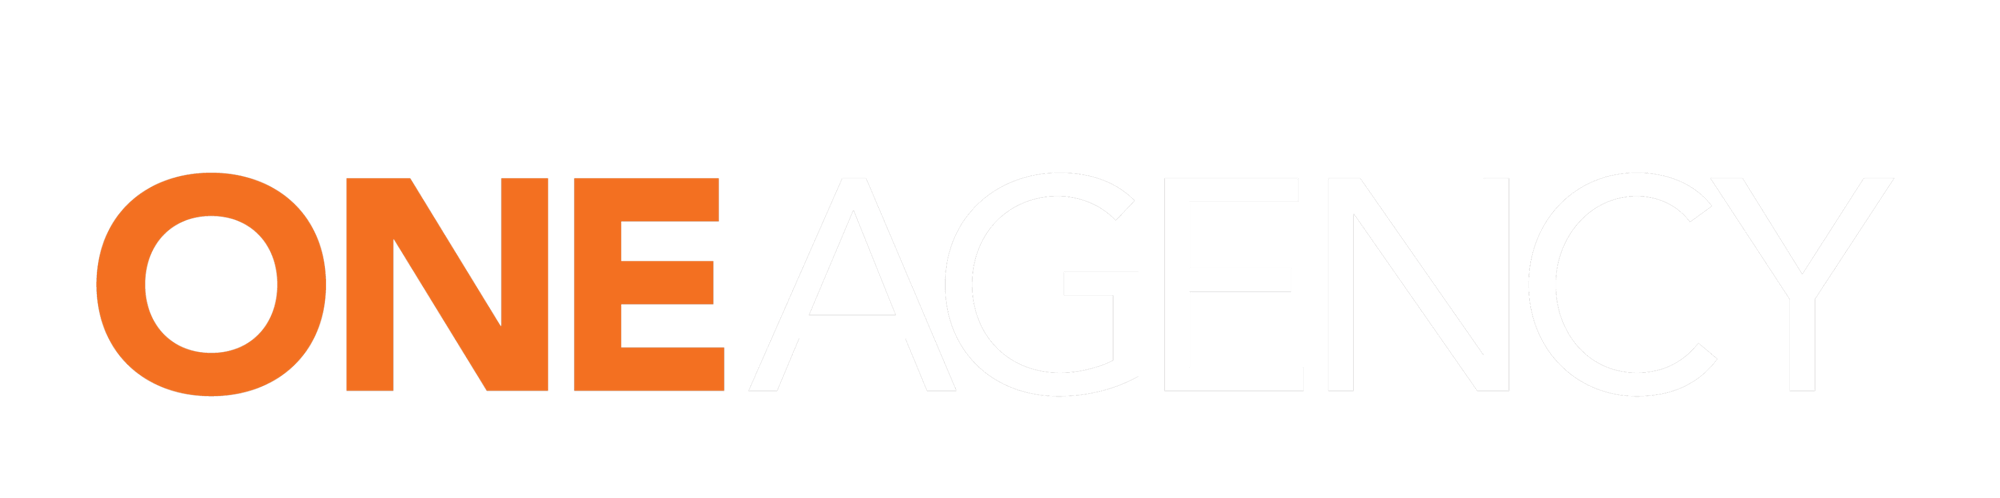 One agency logo